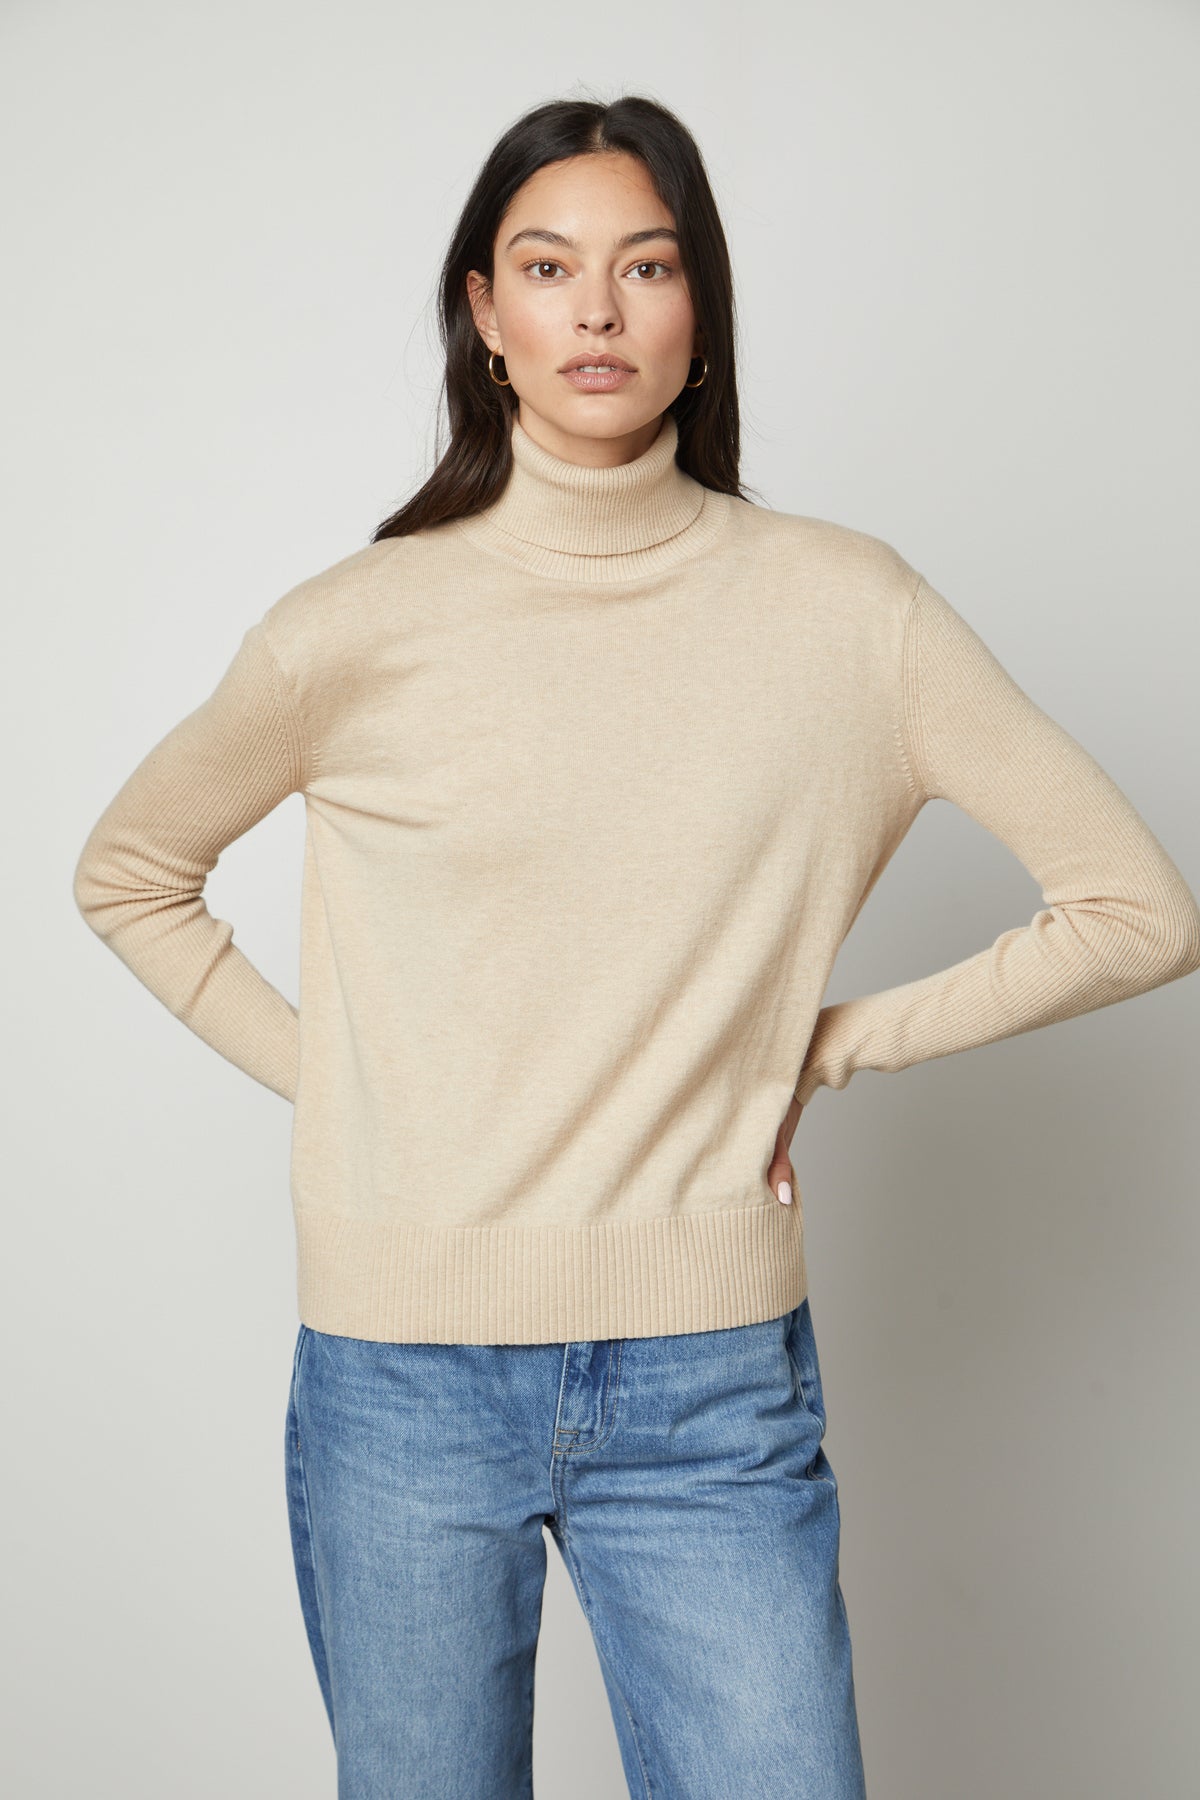 Cashmere Cardigan Sweaters, Mens Mock Turtleneck Cashmere Sweater